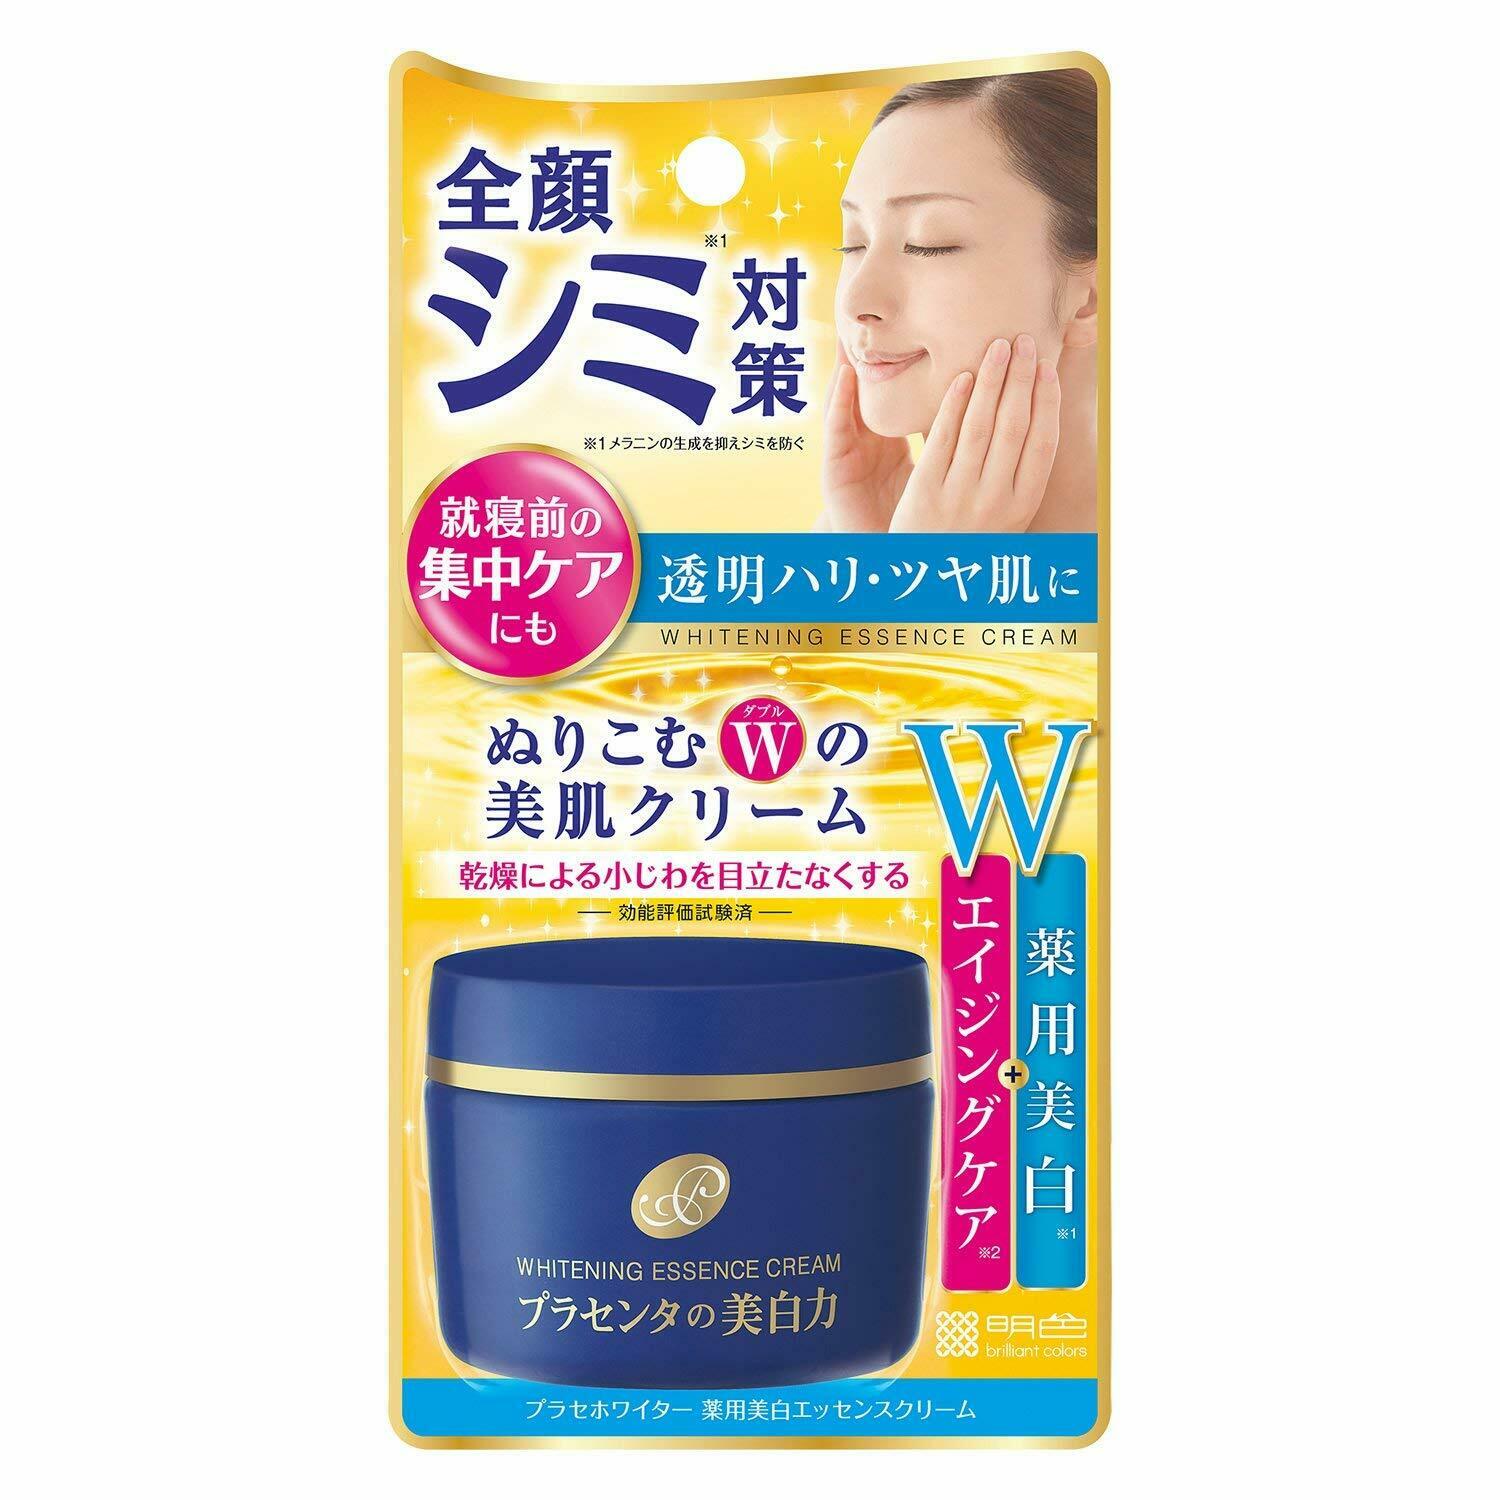 Meishoku PlaceWhiter Whitening Essence Cream with Placenta 55g 